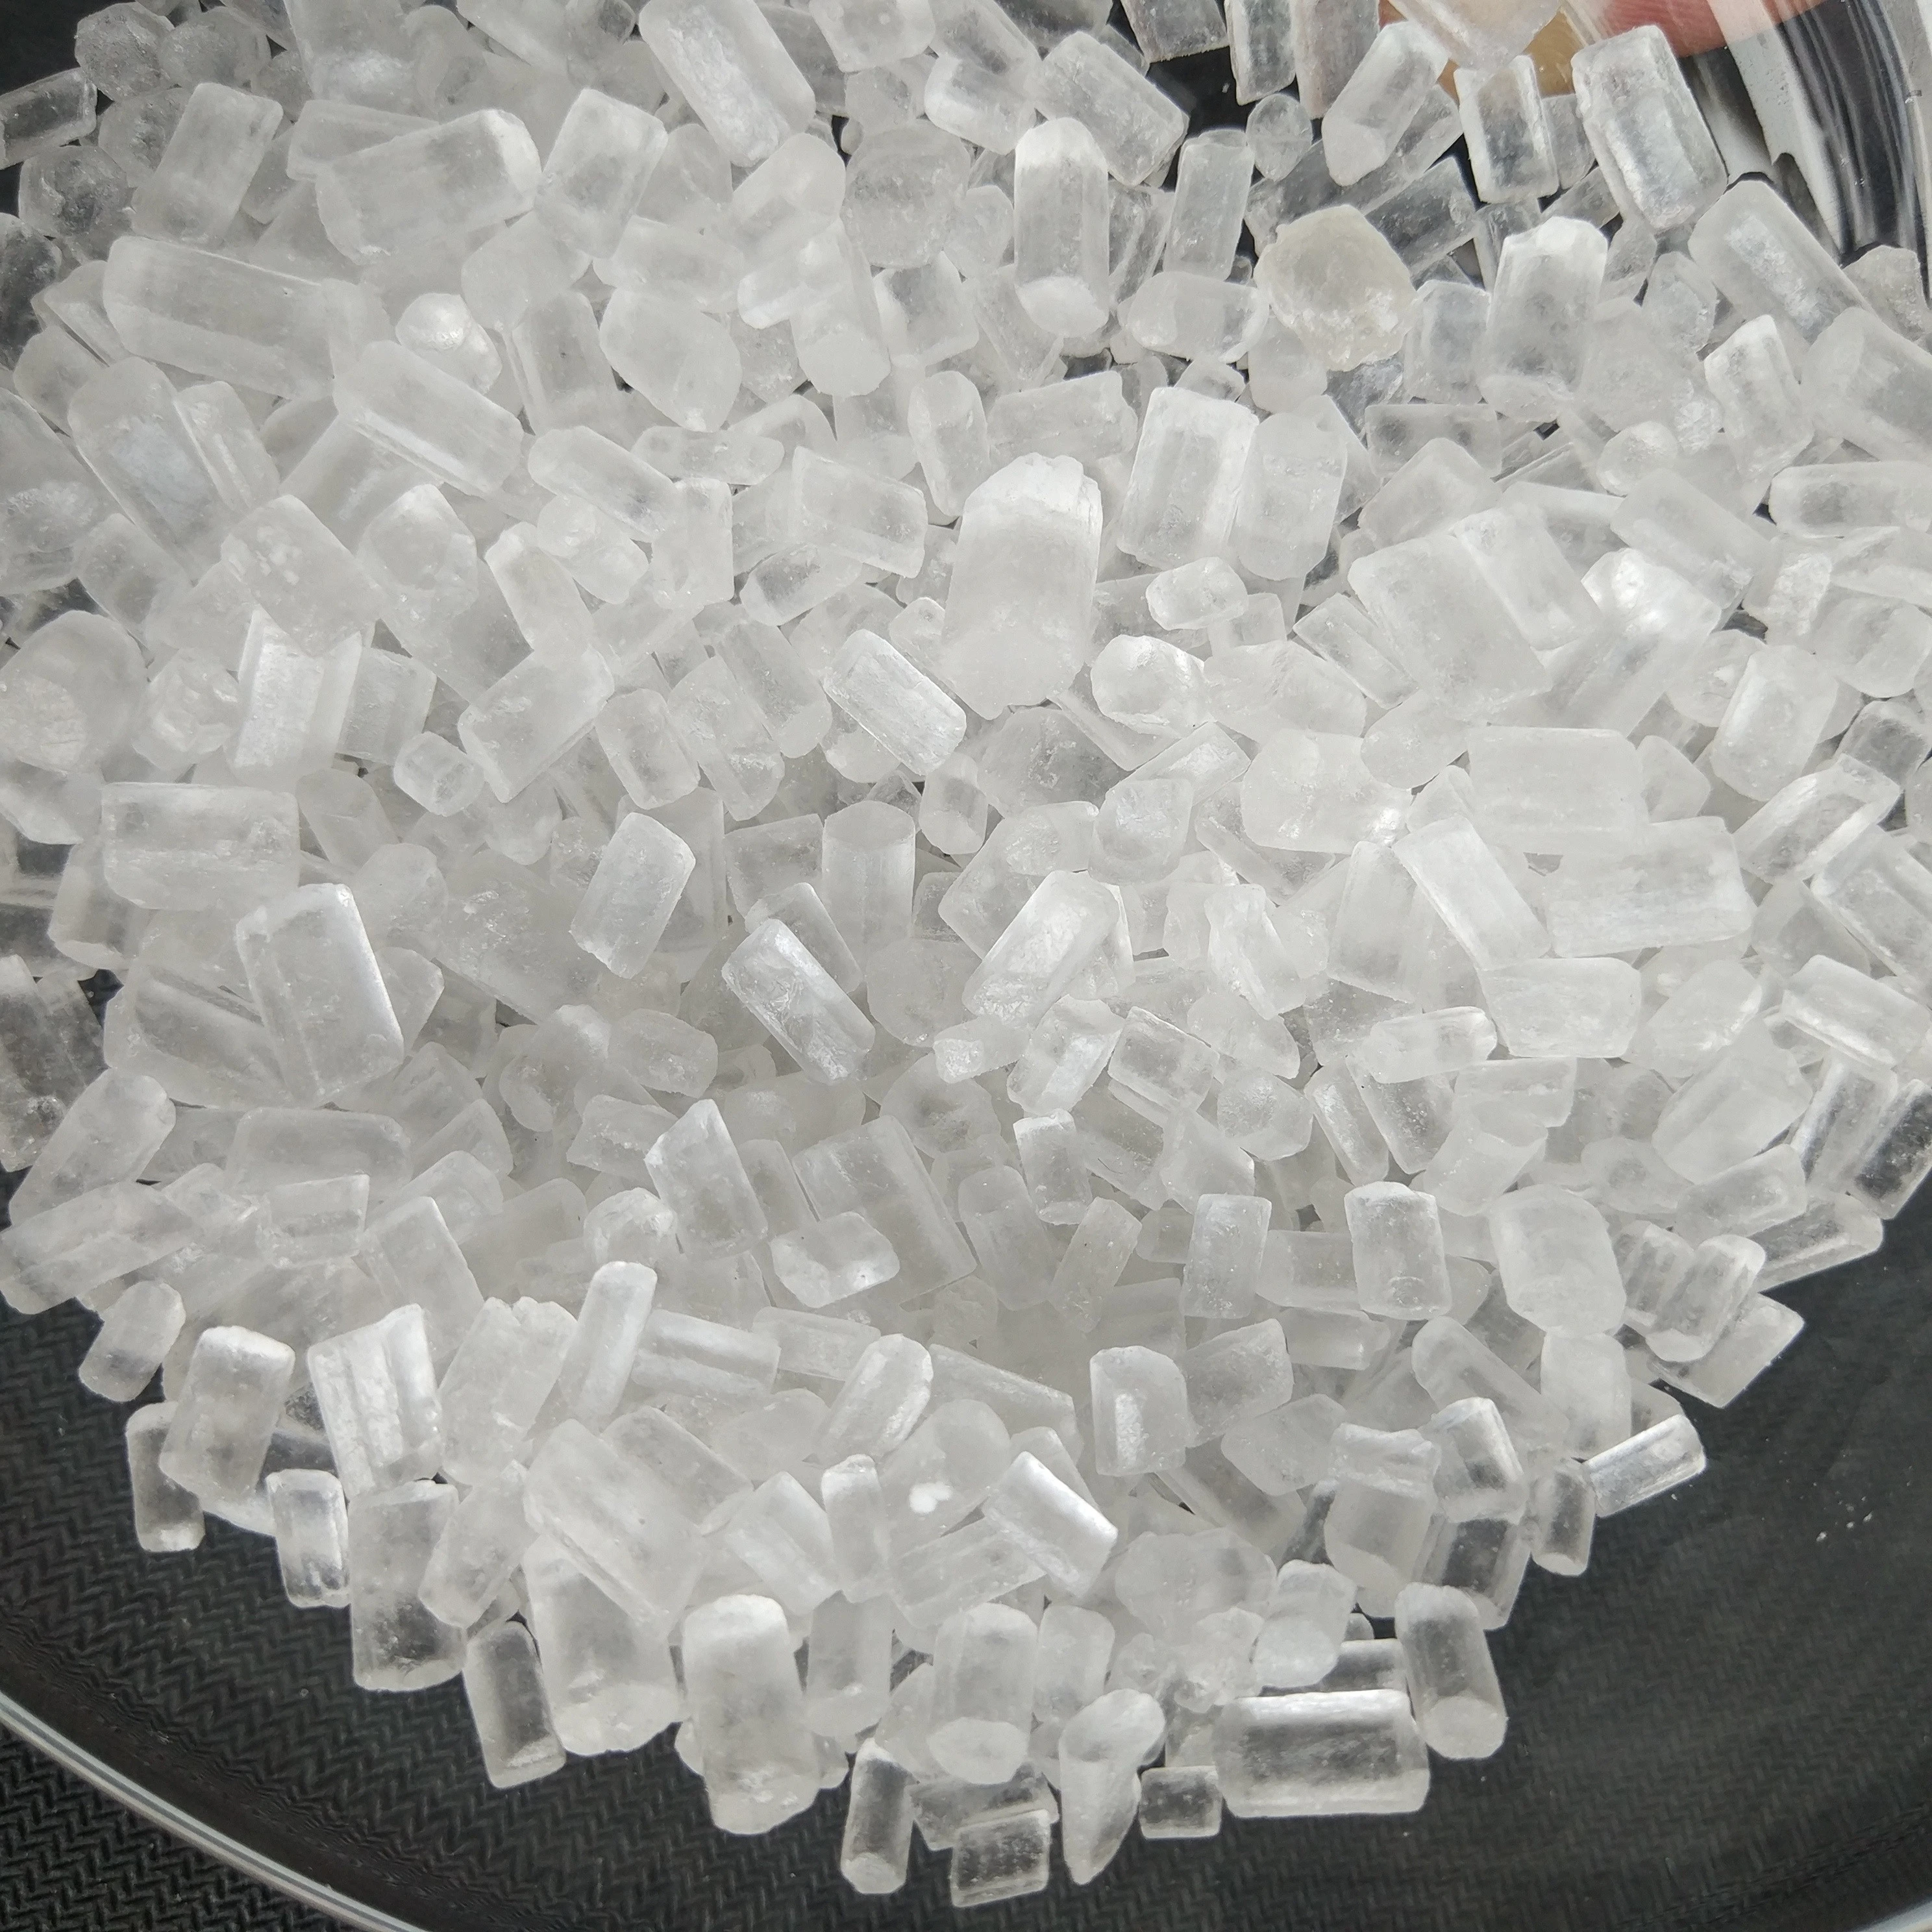 Sodium Thiosulfate 99% high quality Sodium Thiosulphate